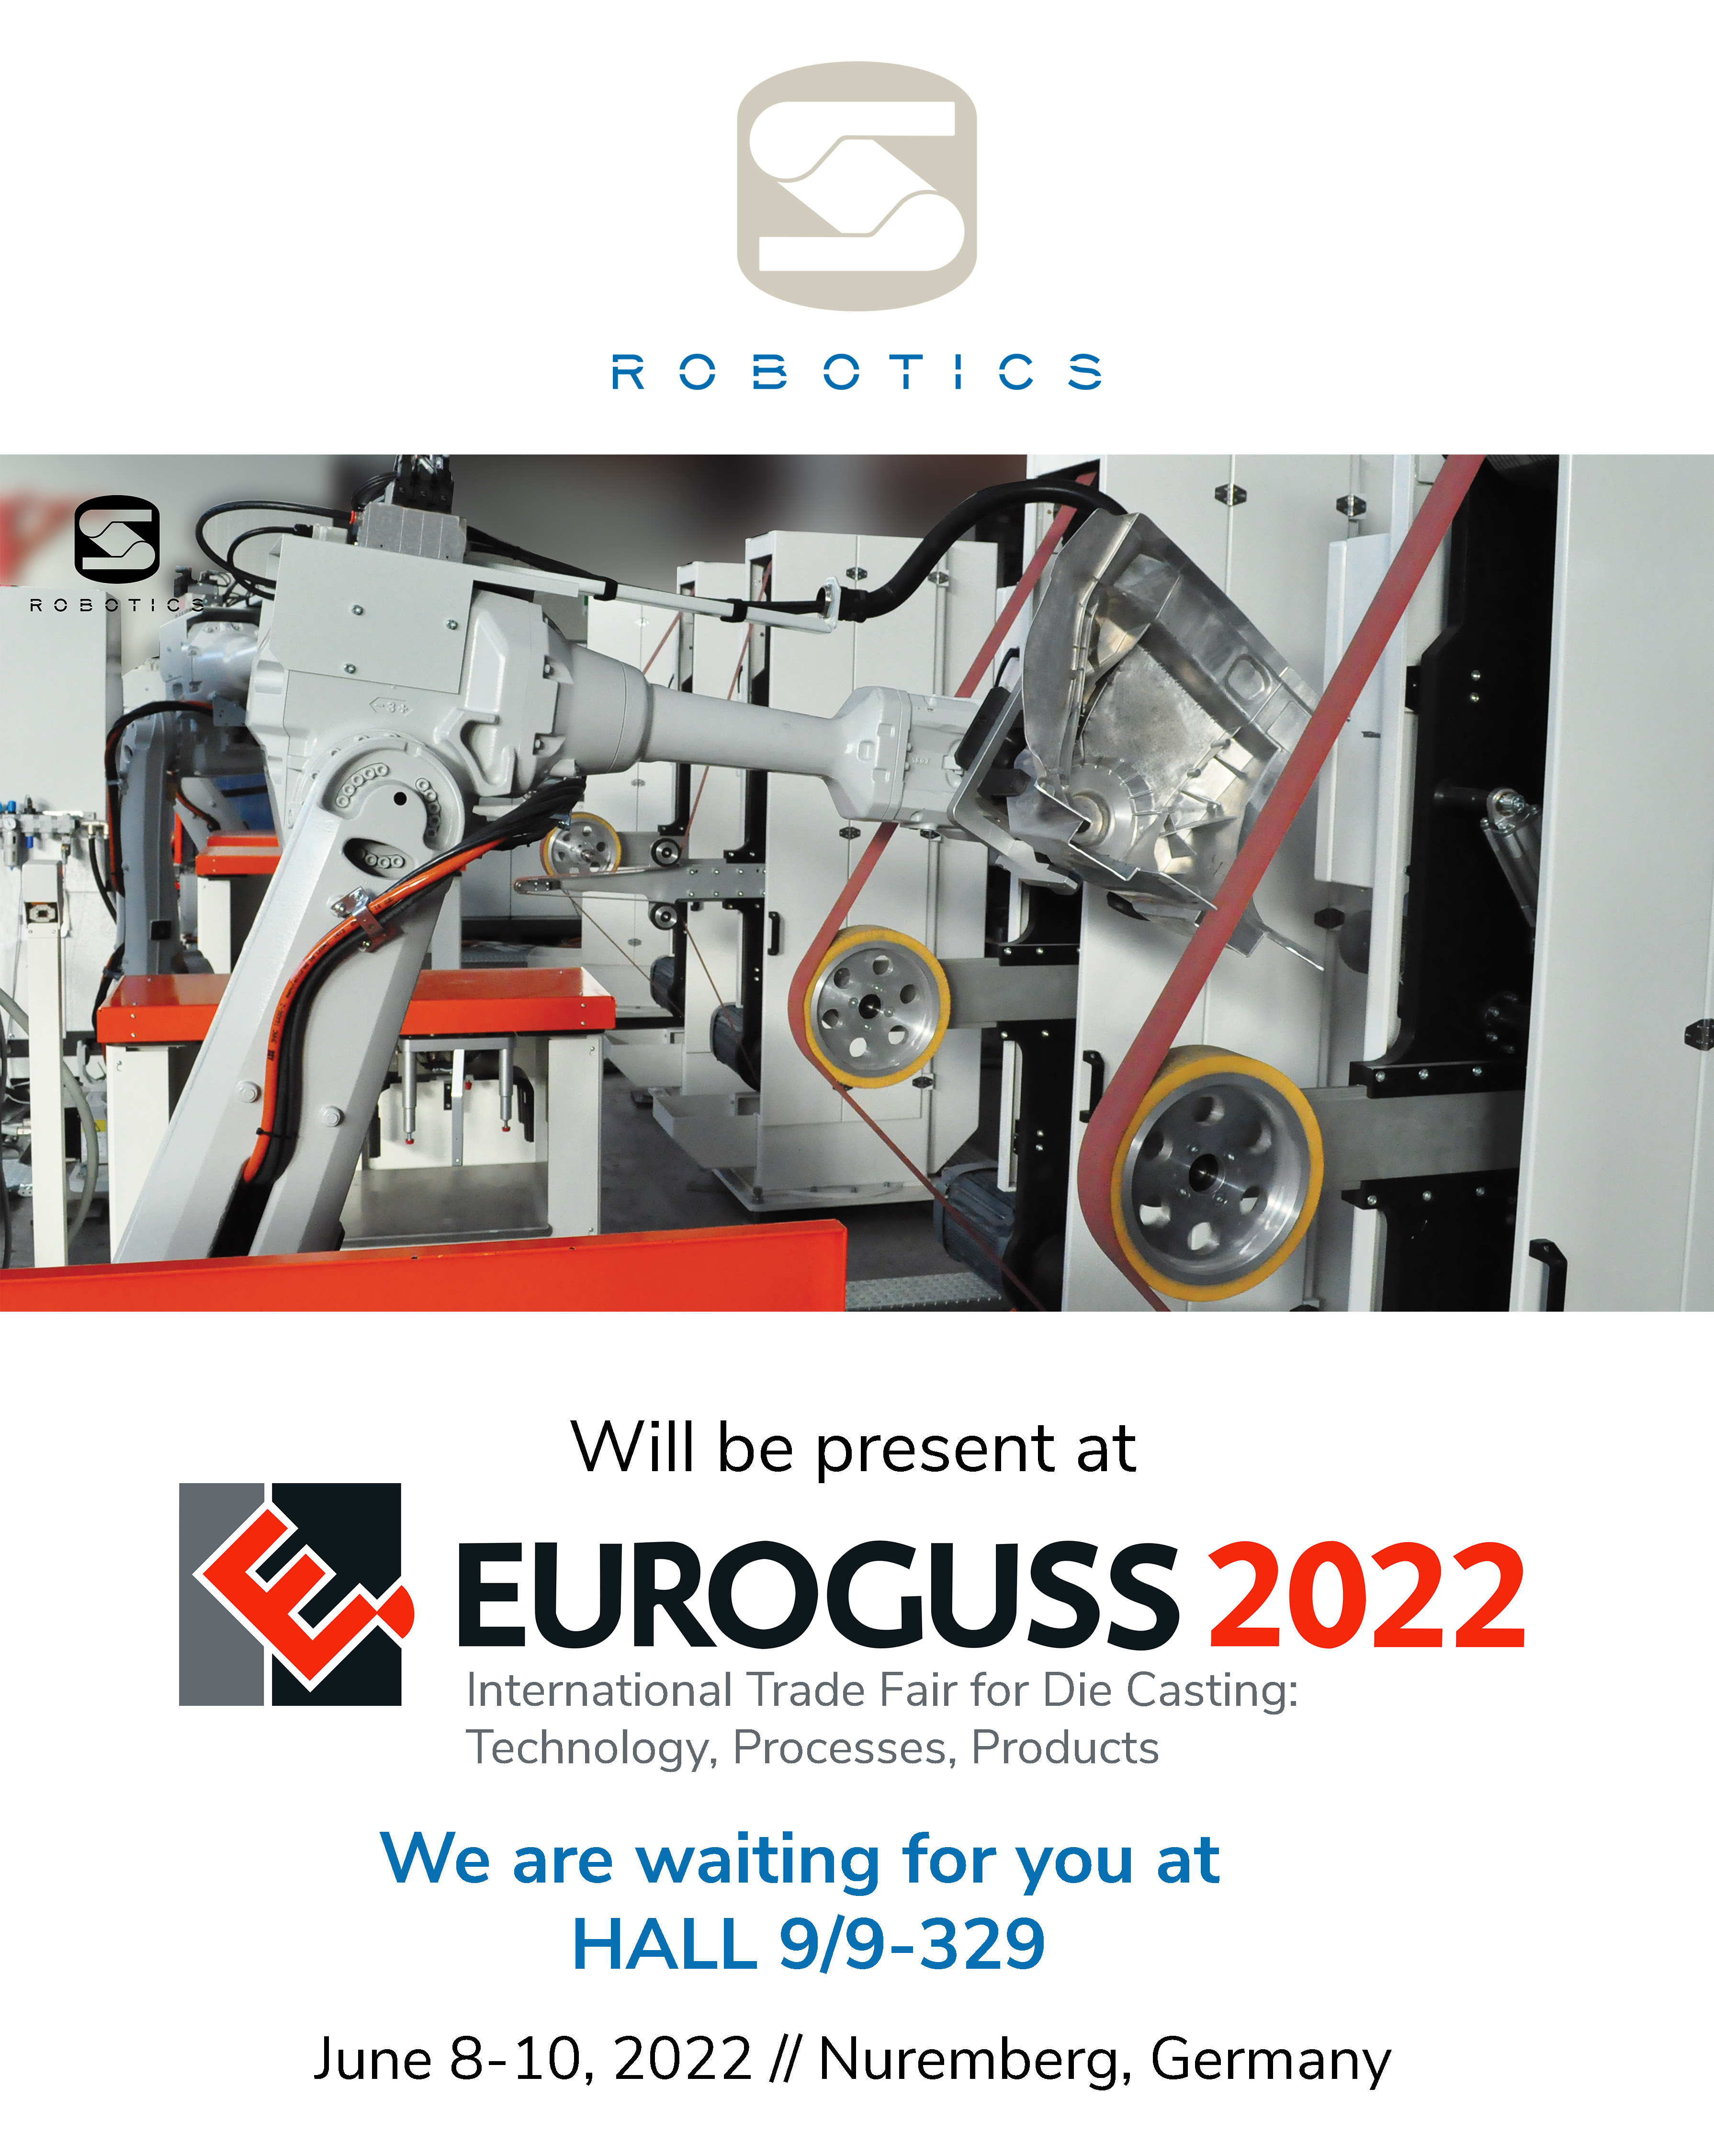 Sir Robotics Nuremberg June 2022